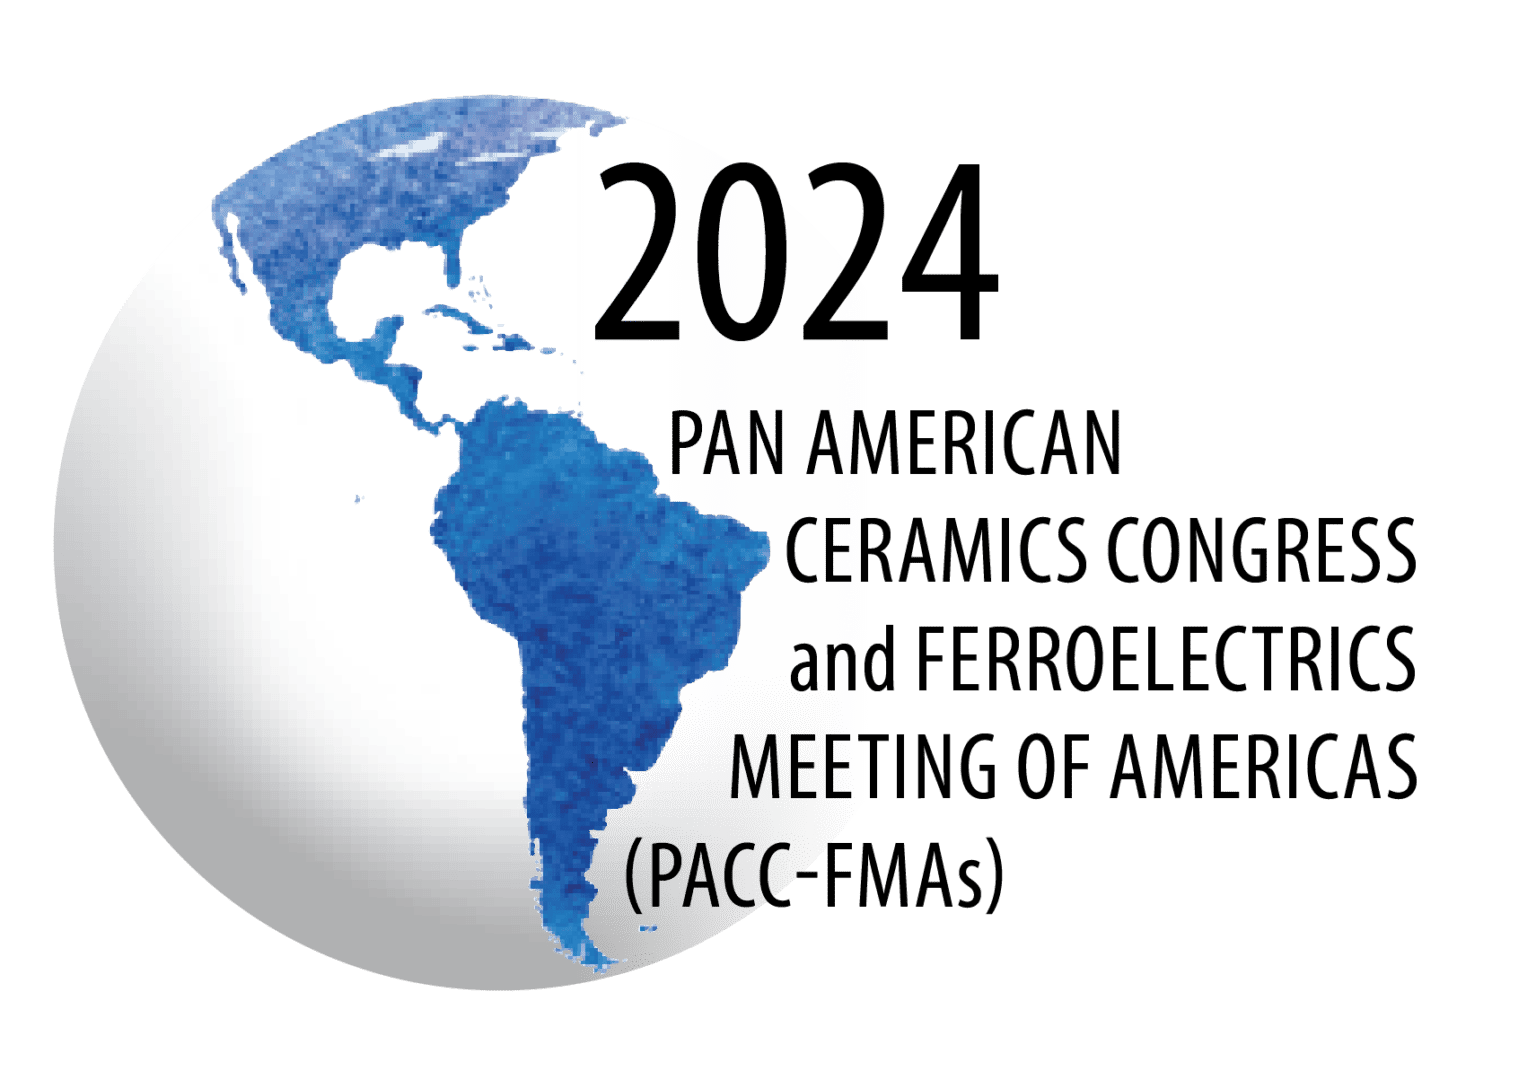 Pan American Ceramics Congress and Ferroelectrics Meeting of Americas